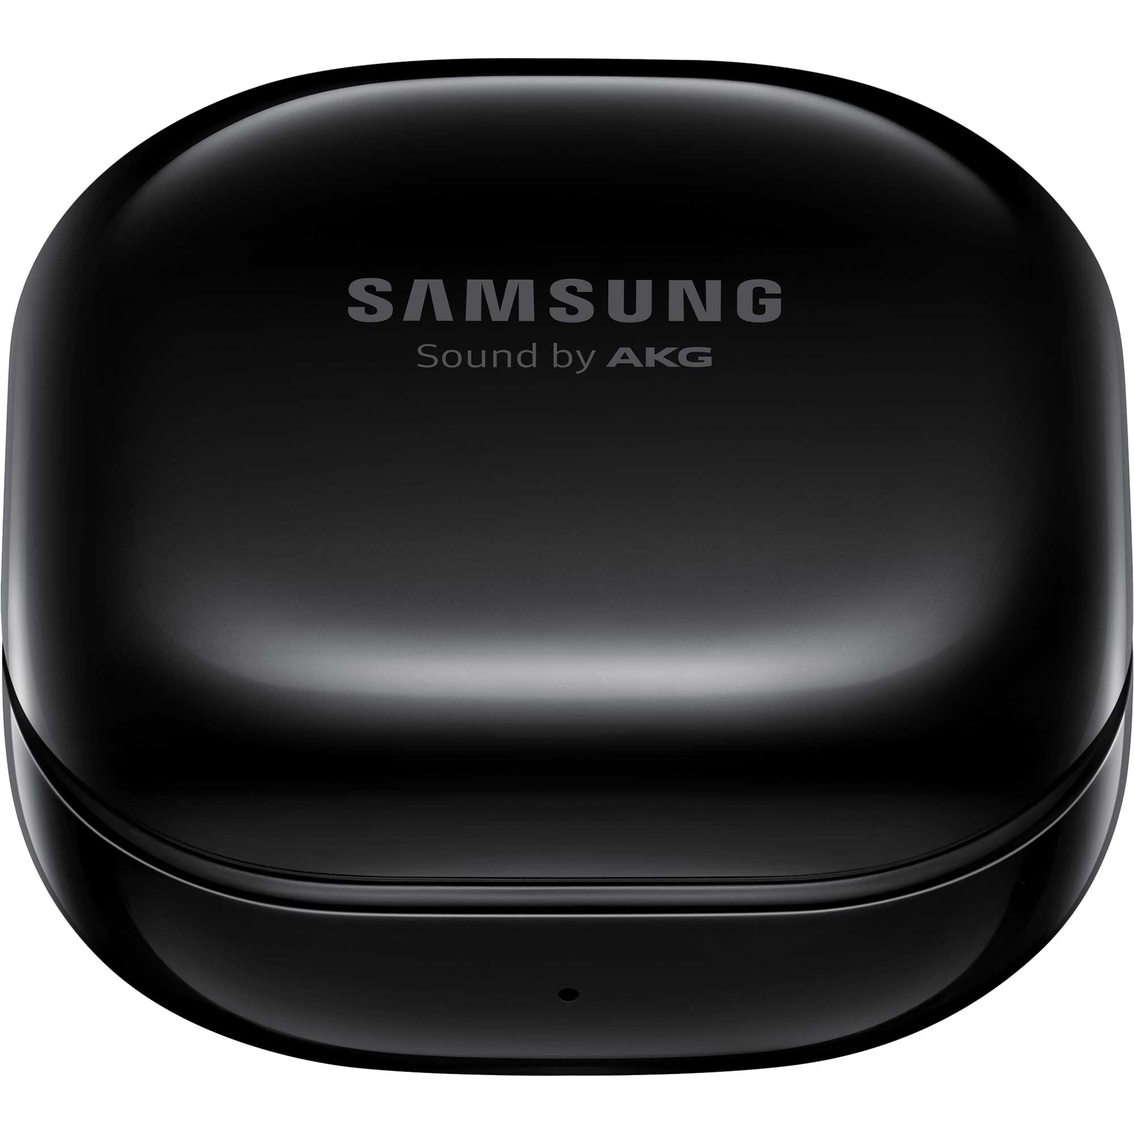 Samsung Galaxy Buds Live Wireless Earbuds, Headphones & Microphones, Electronics